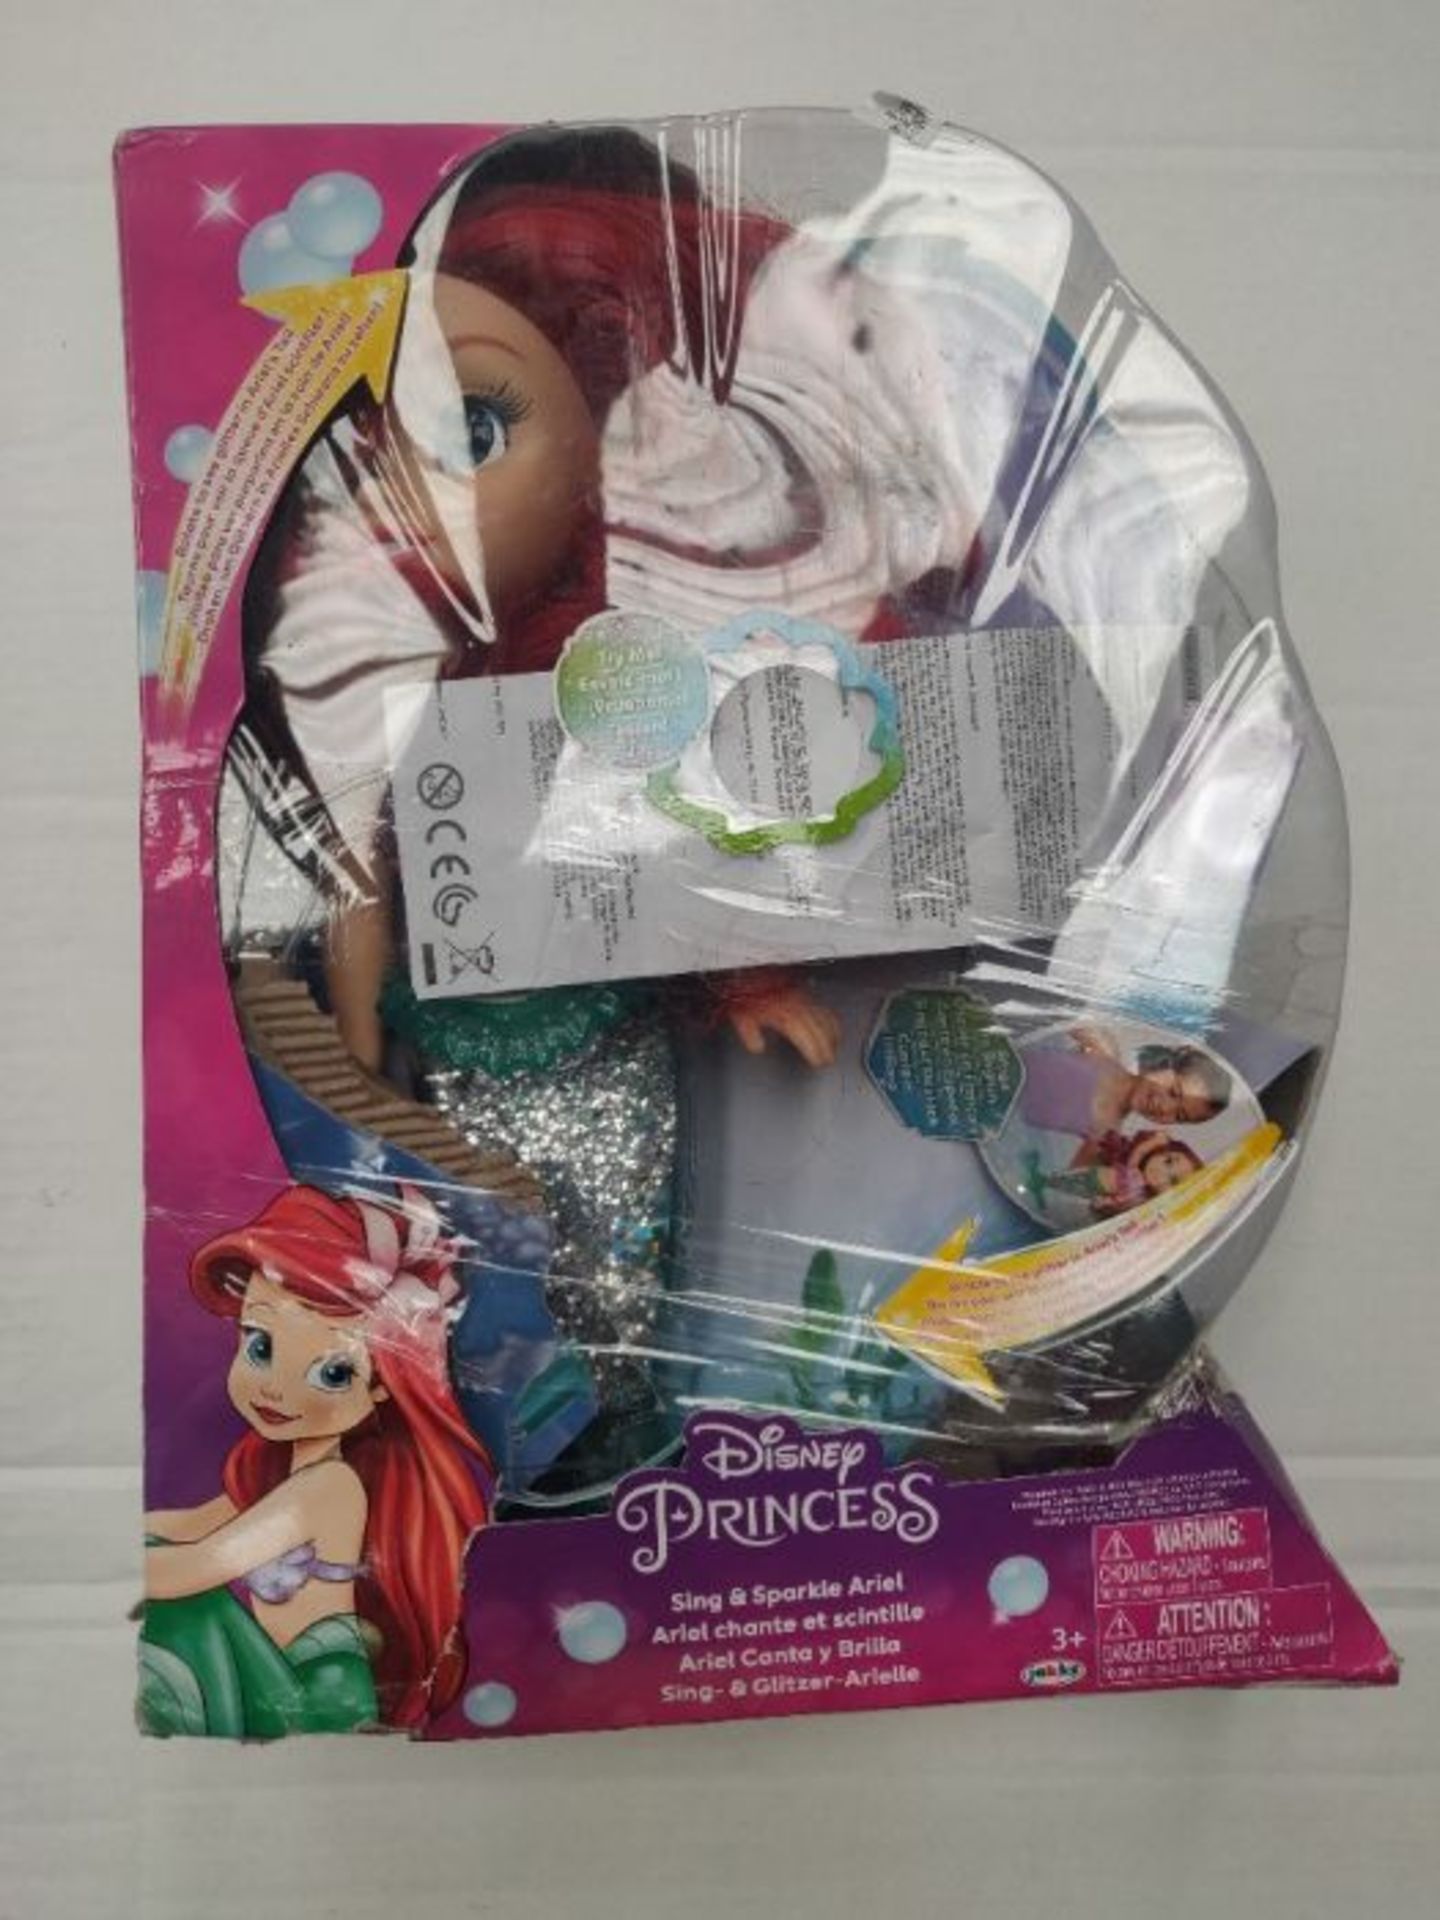 Disney Princess Sing & Sparkle Ariel Doll - Image 2 of 3